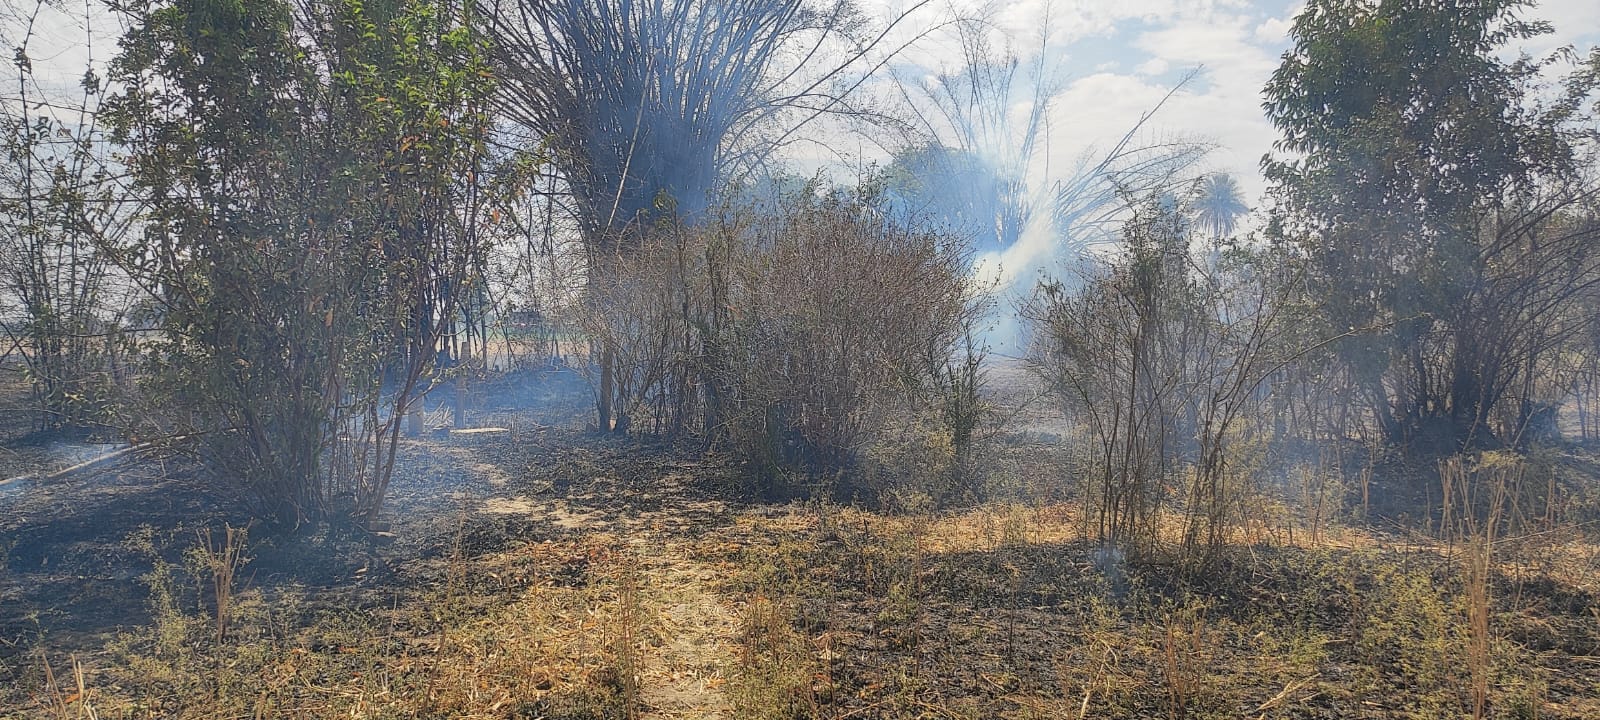 SHIVPURI bamboo field burns